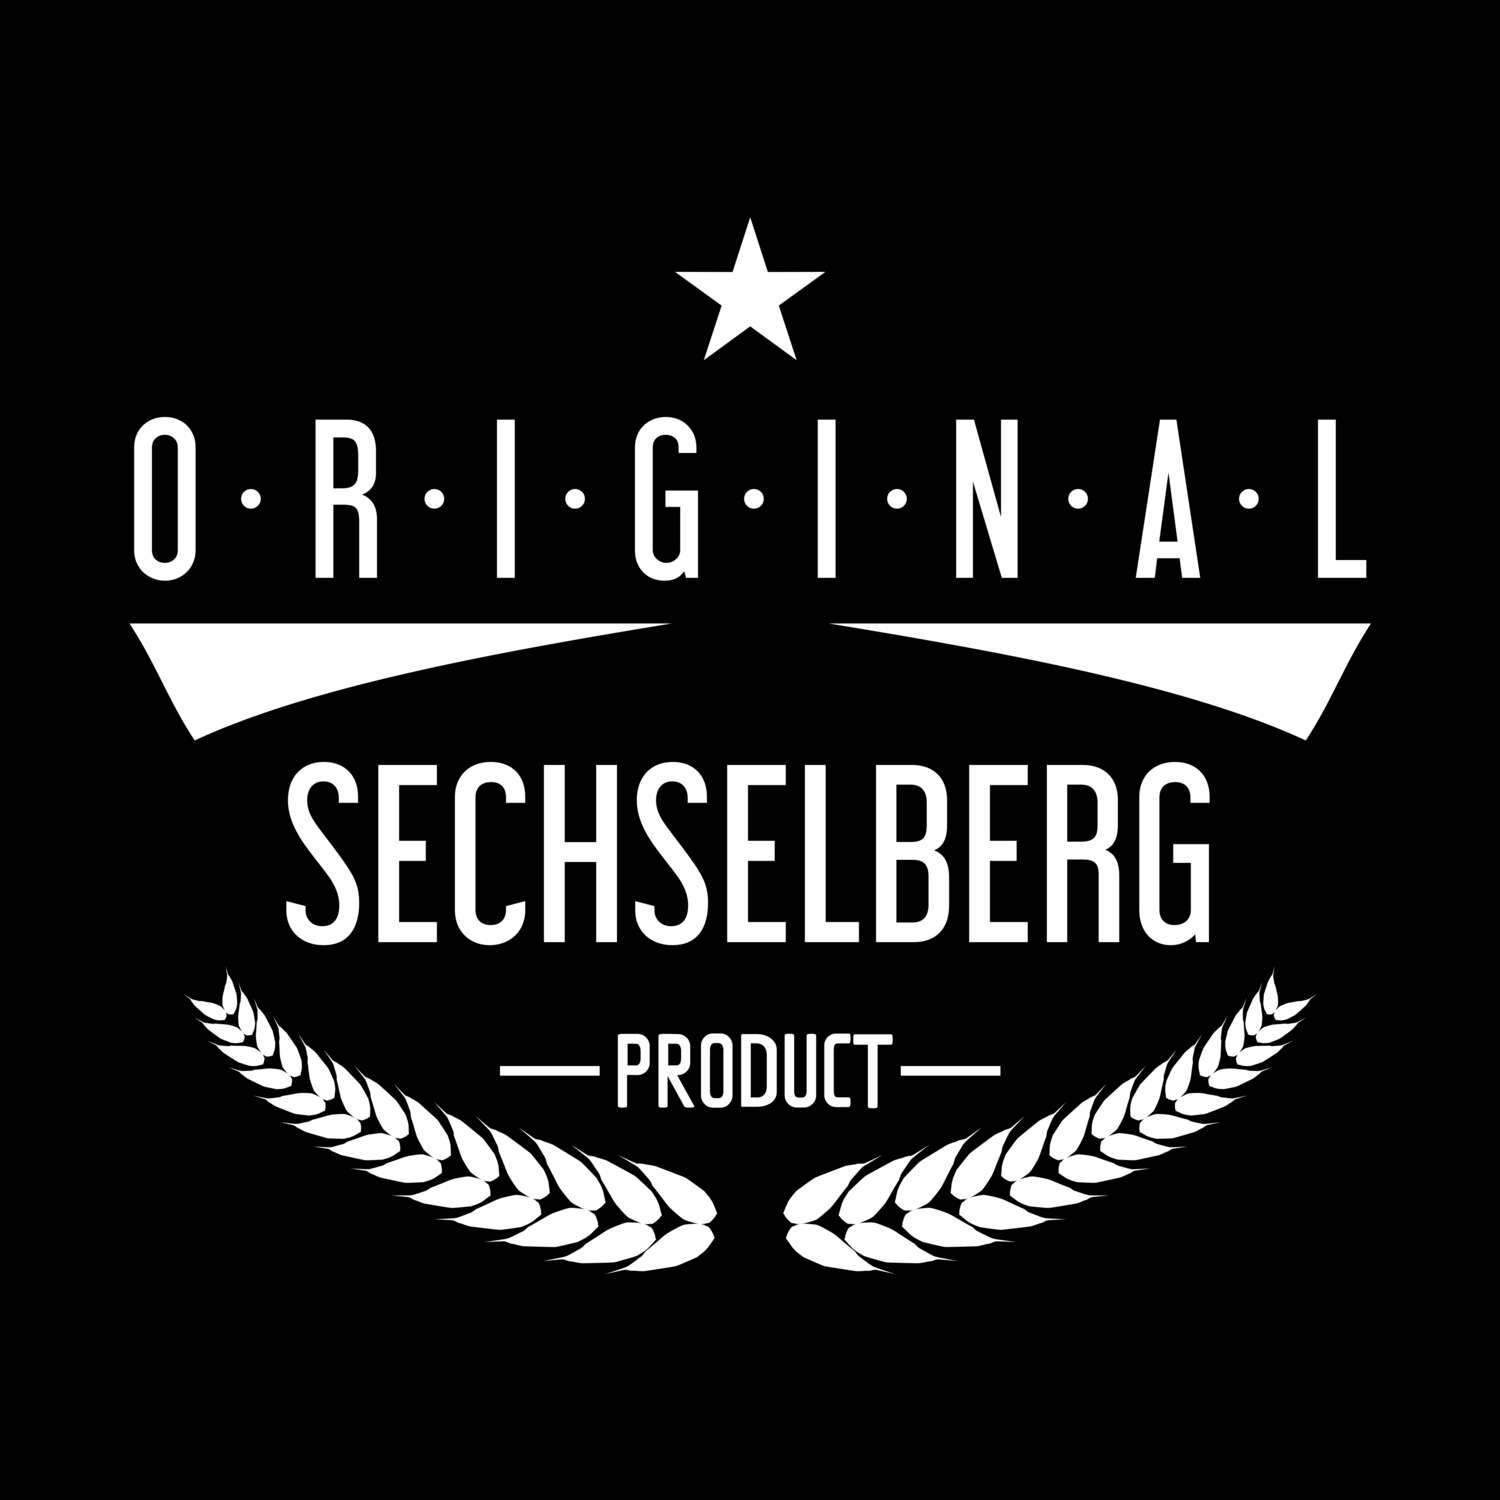 Sechselberg T-Shirt »Original Product«